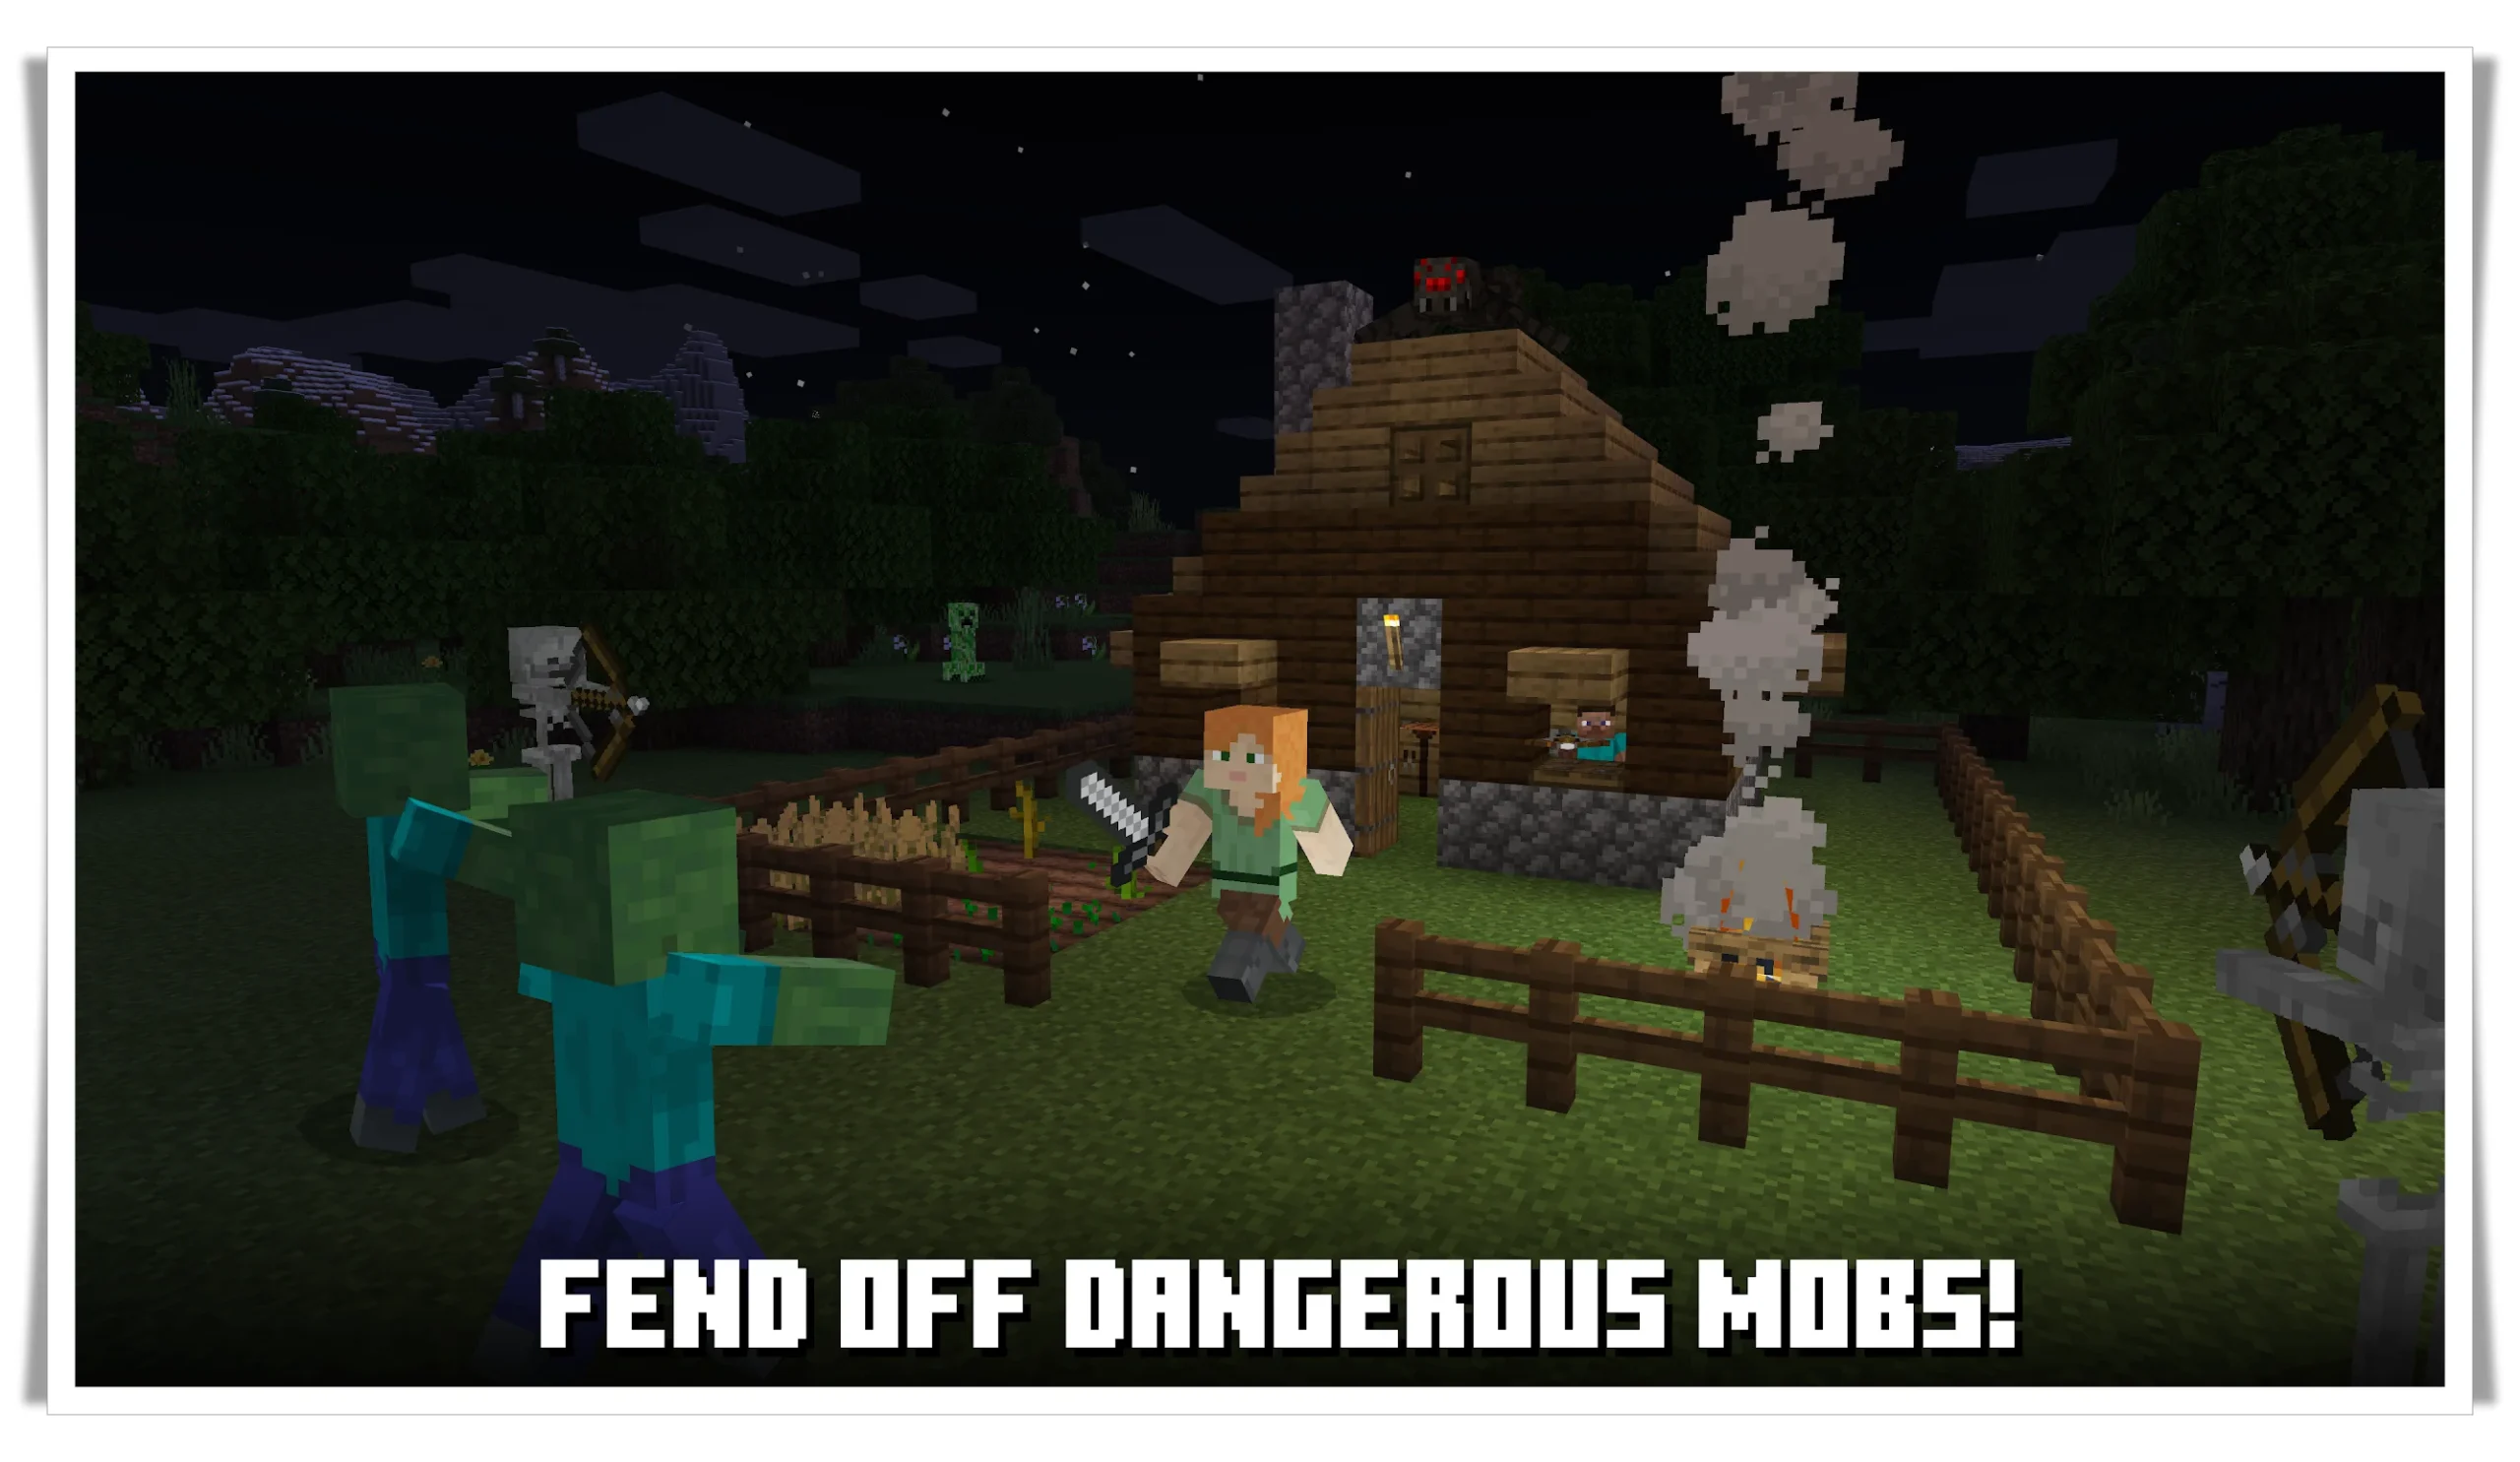 Download Minecraft mod apk 1.20.60.23 latest version